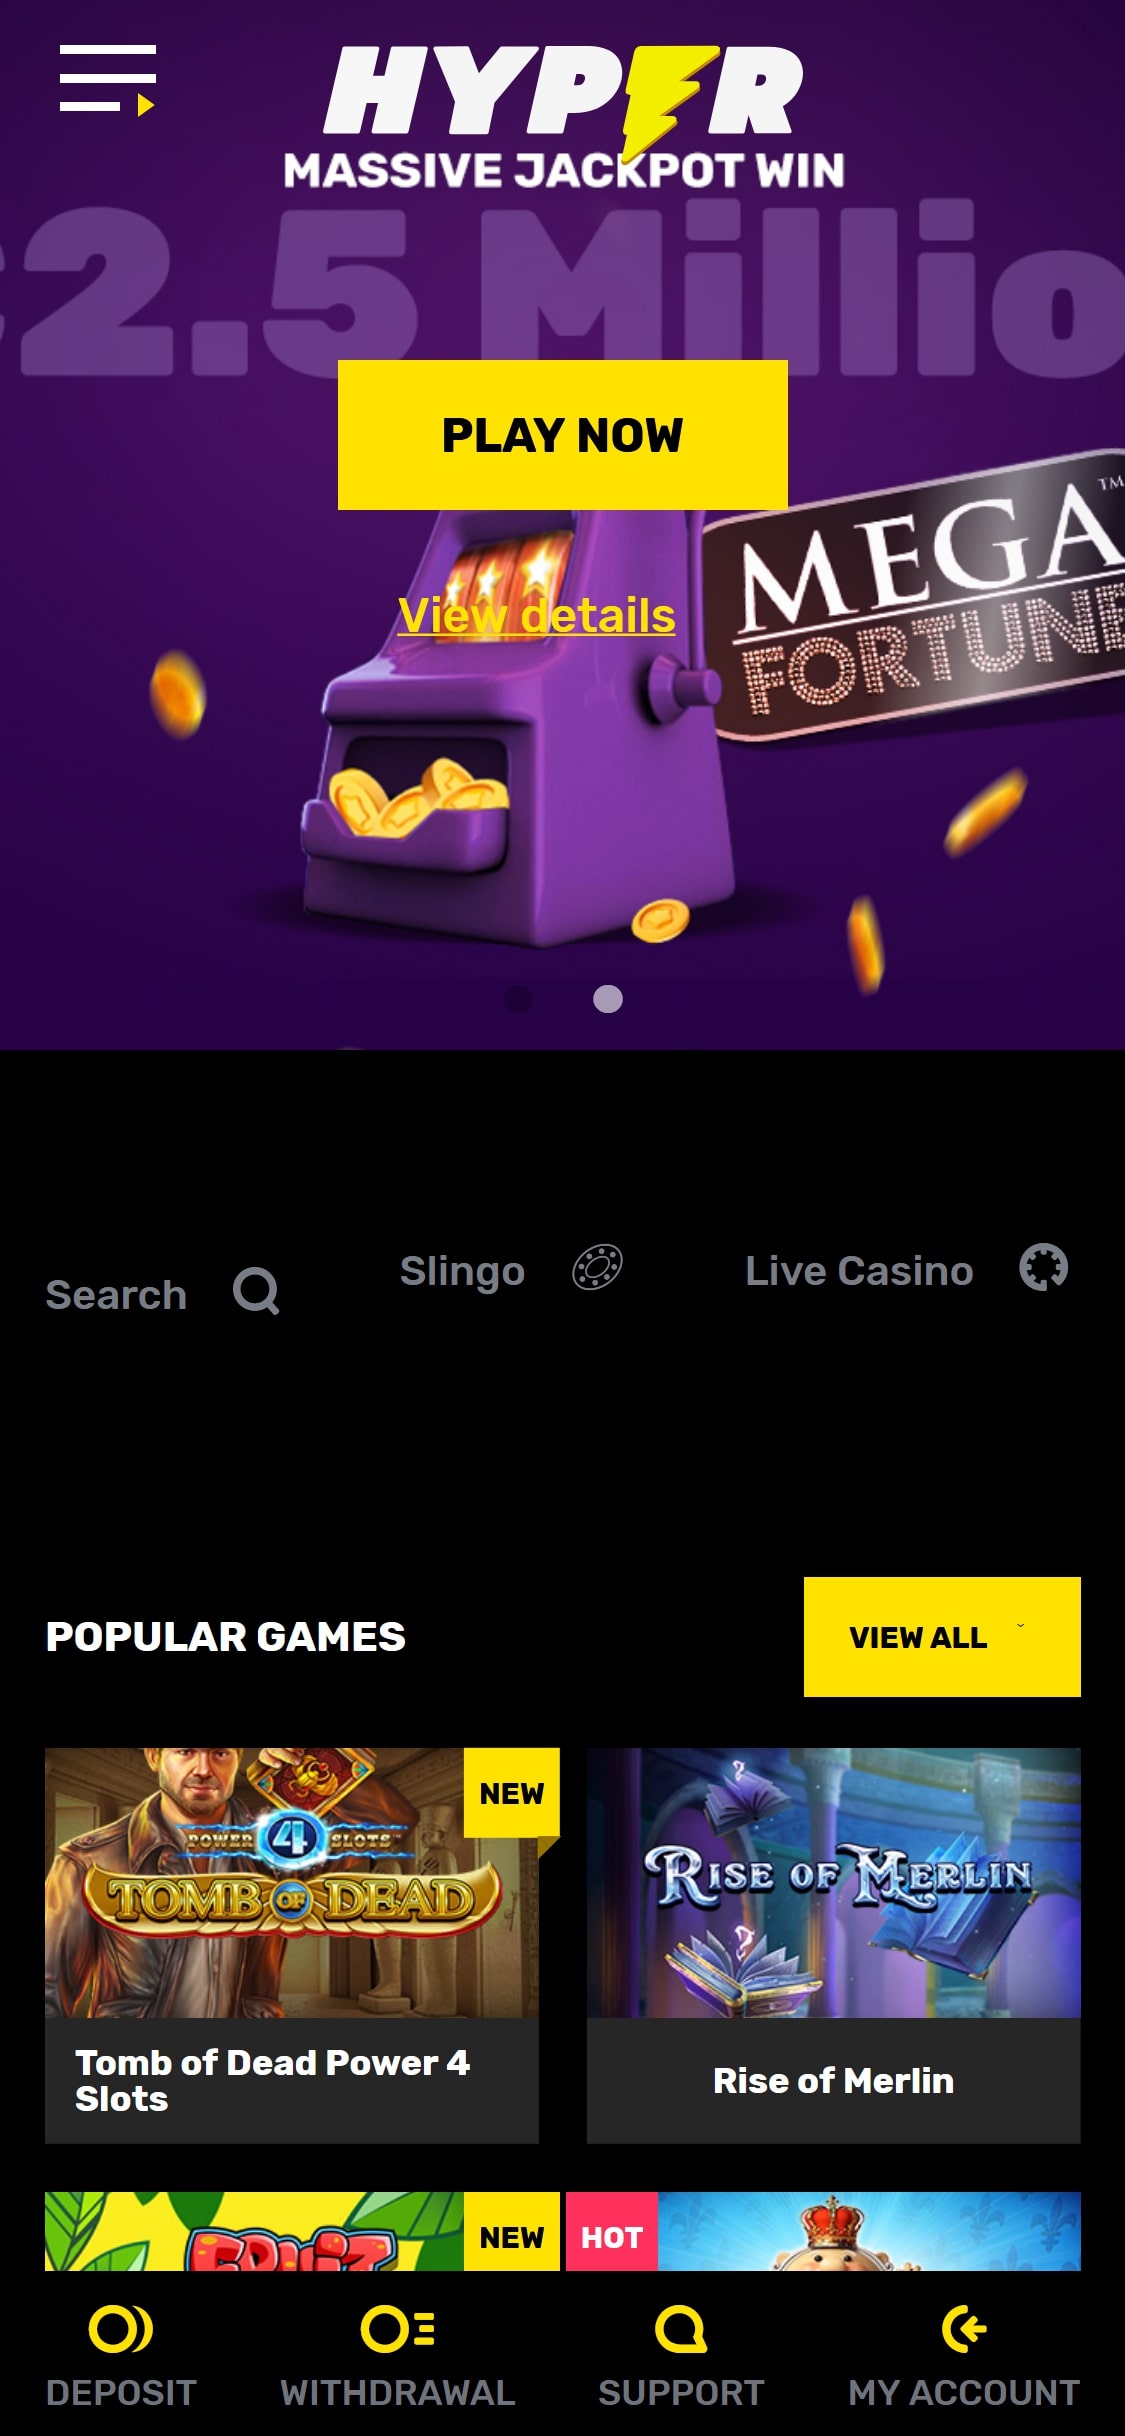 Hyper Casino Mobile Review